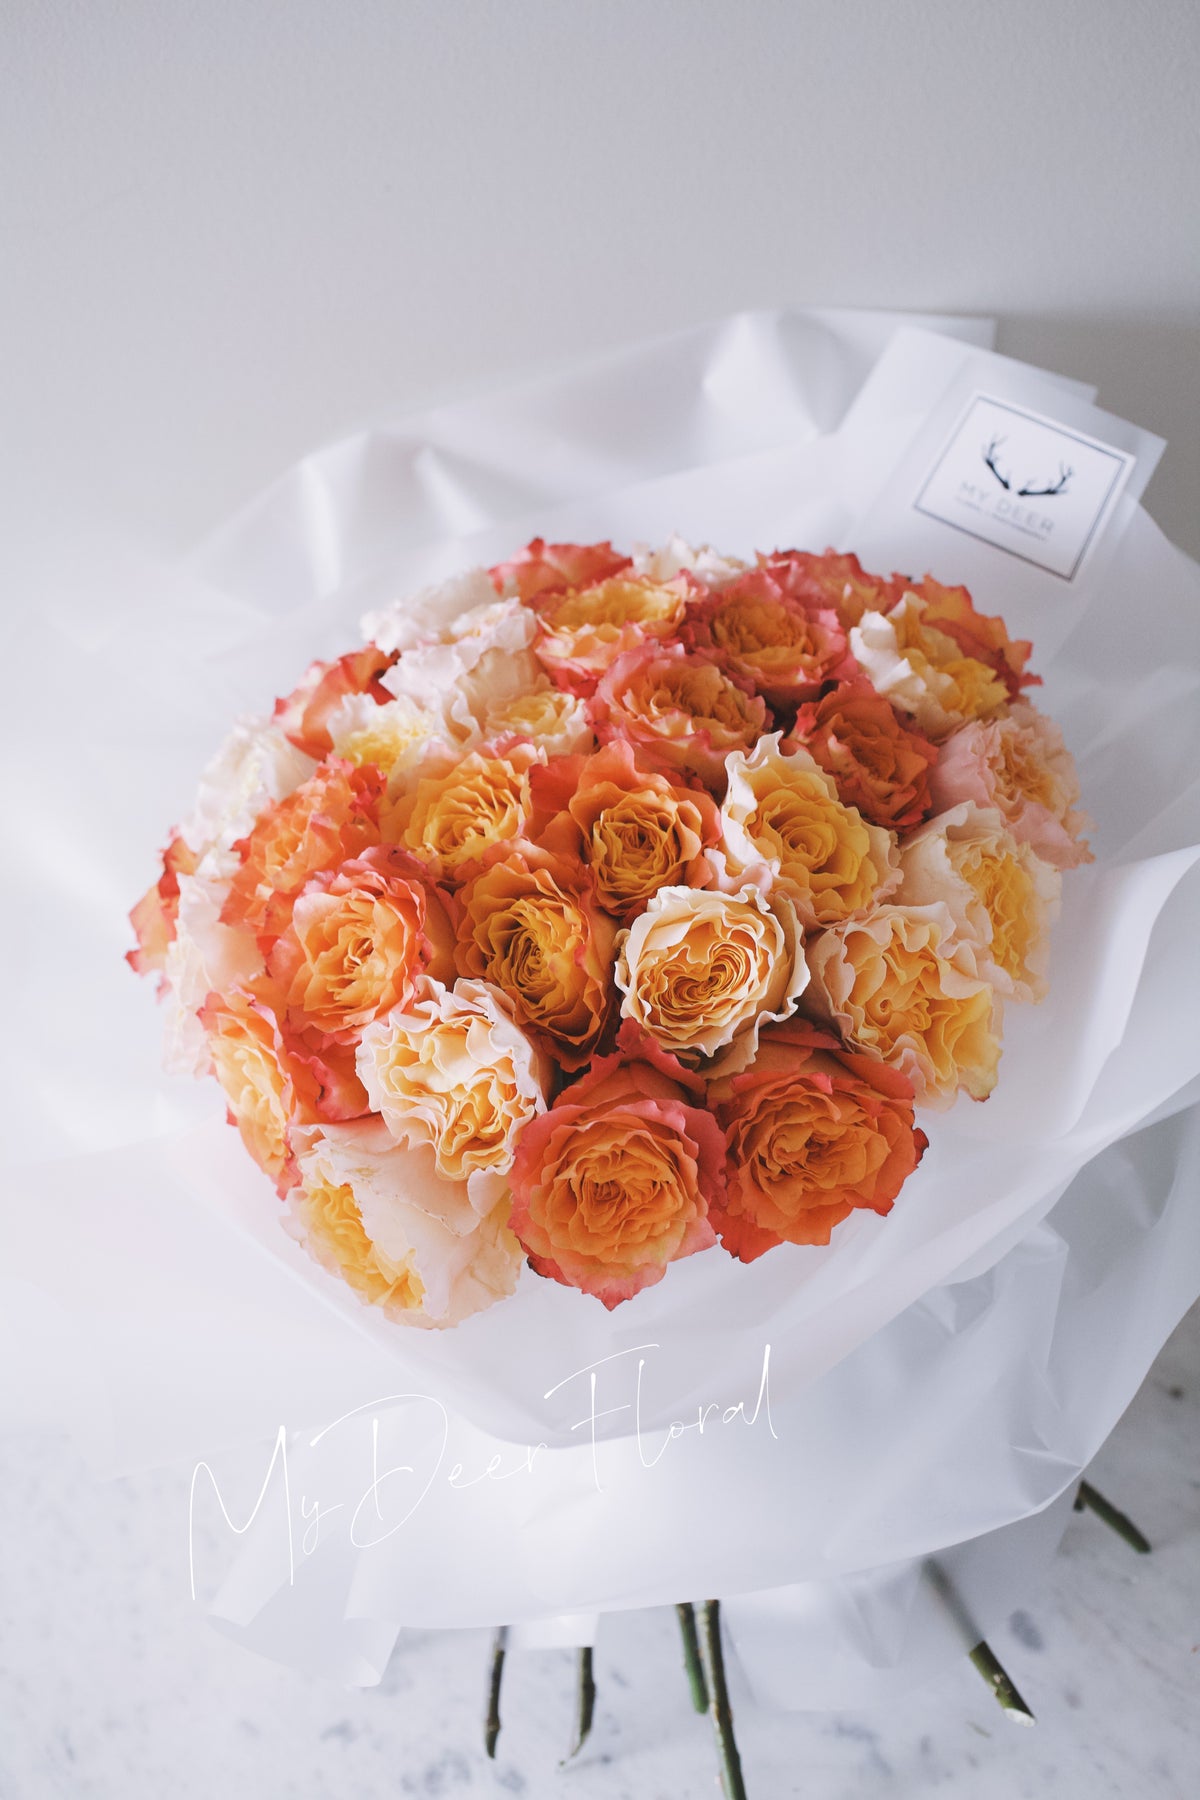 拼色玫瑰花束 | Mixed Roses Bouquet